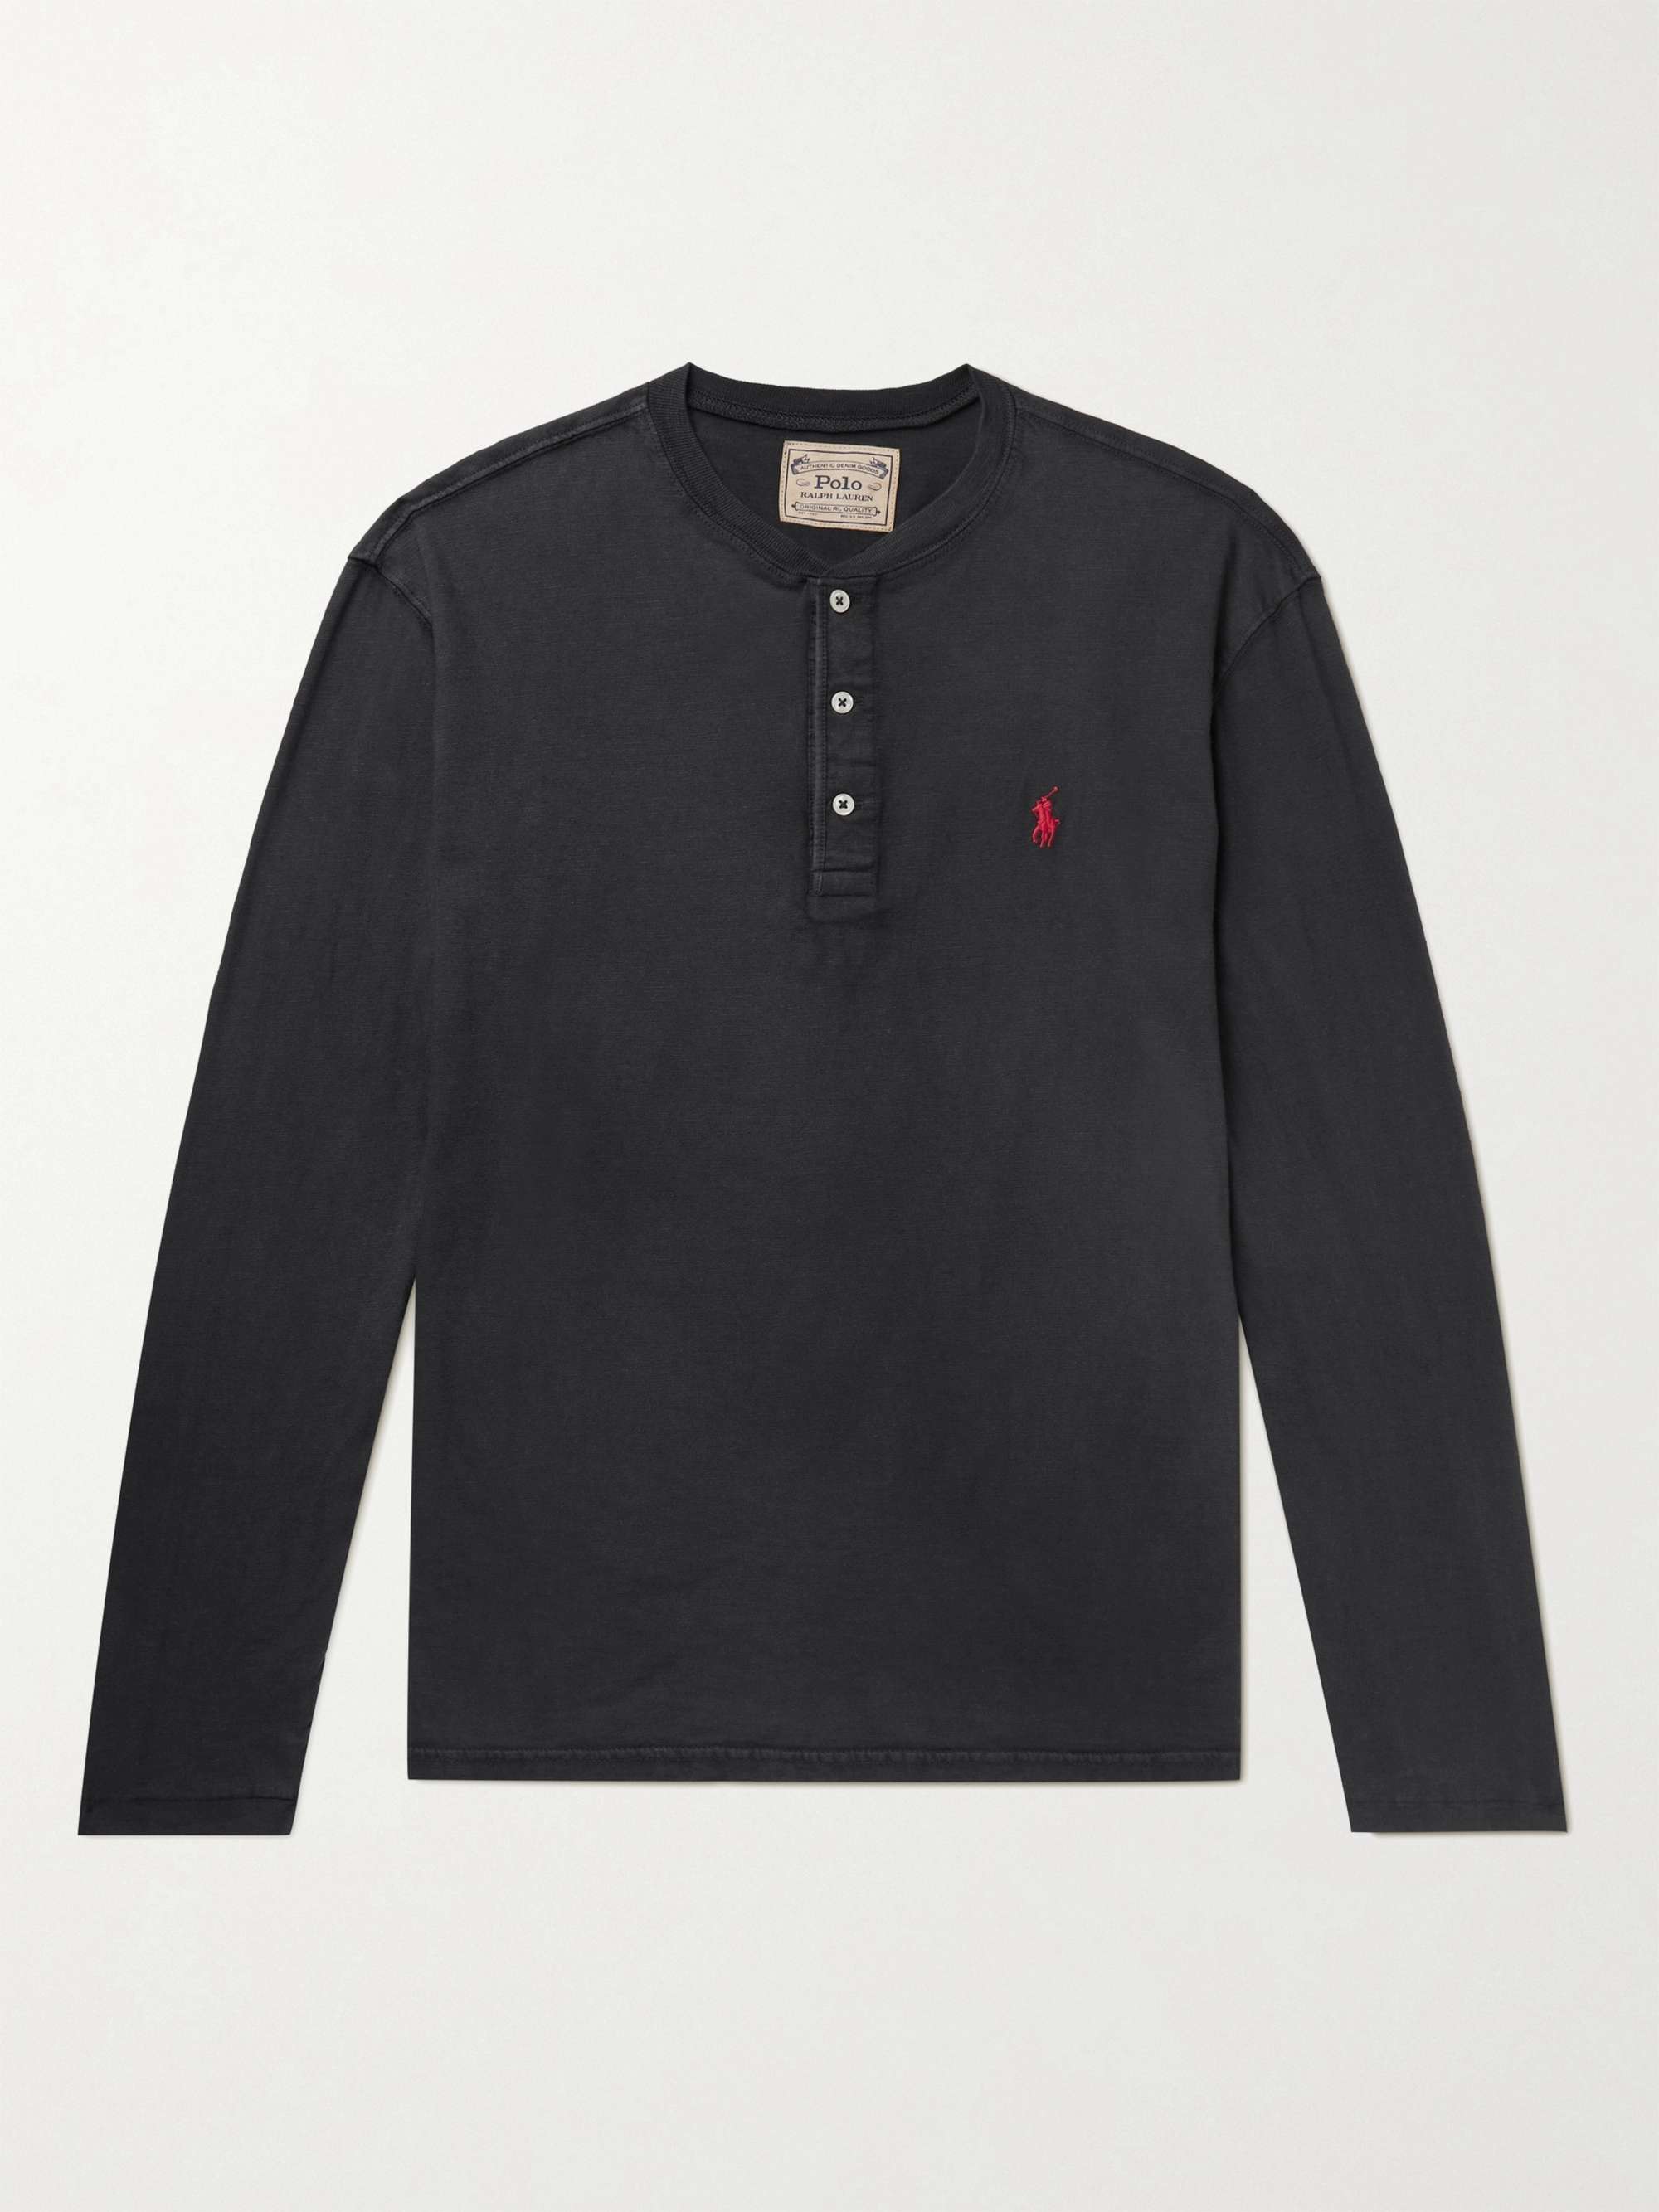 POLO RALPH LAUREN Logo-Embroidered Slub Cotton-Jersey Henley T-Shirt,Black